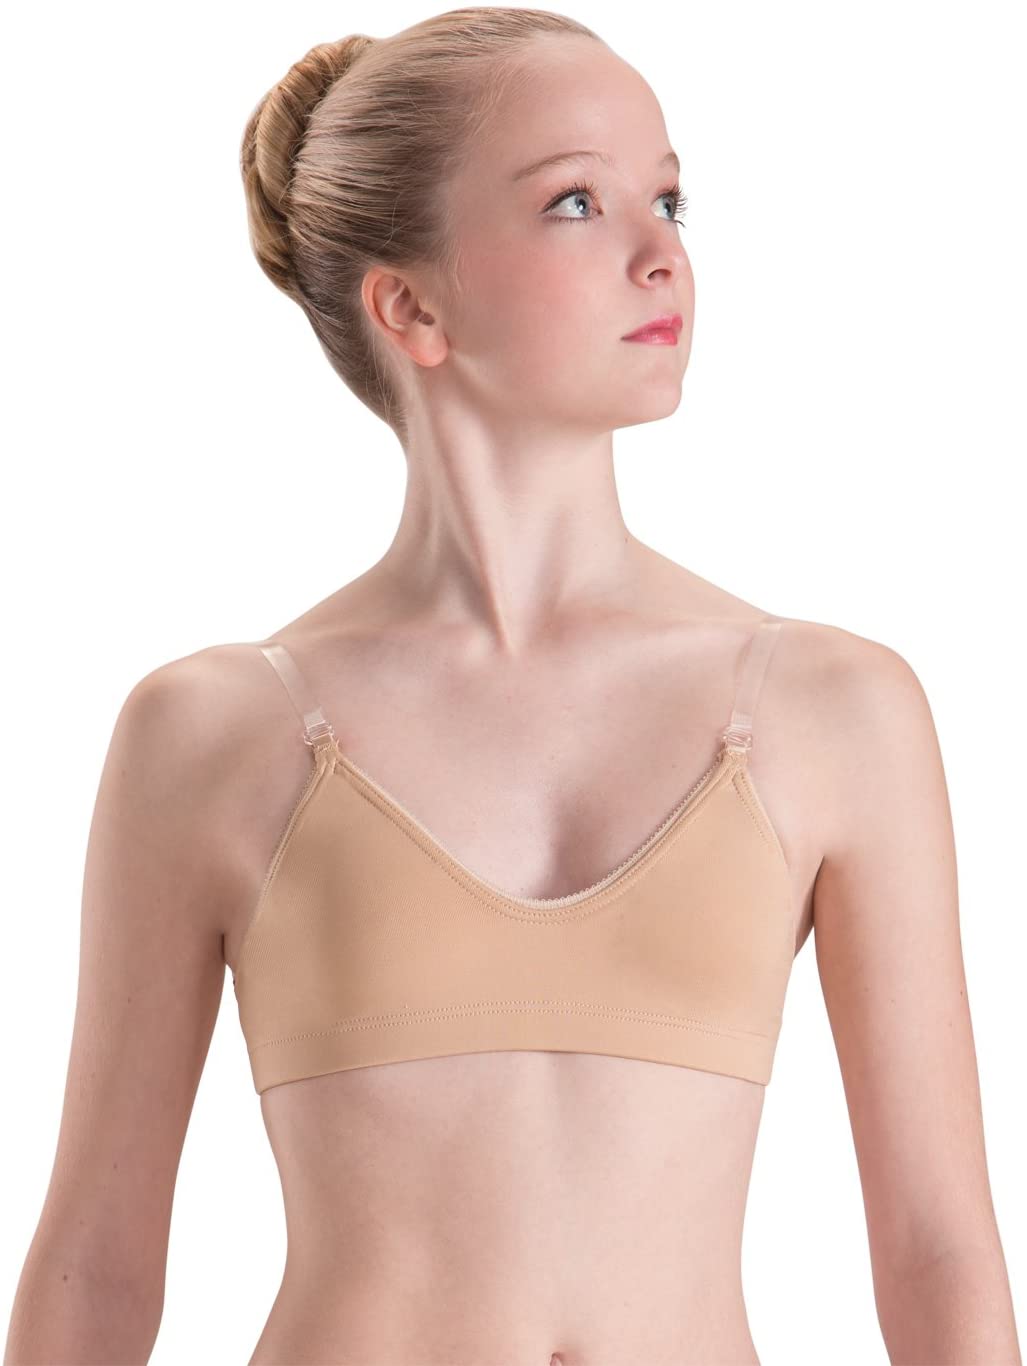 Dance Undergarments Canada: Shop Clear Back Bras, Bodyliners